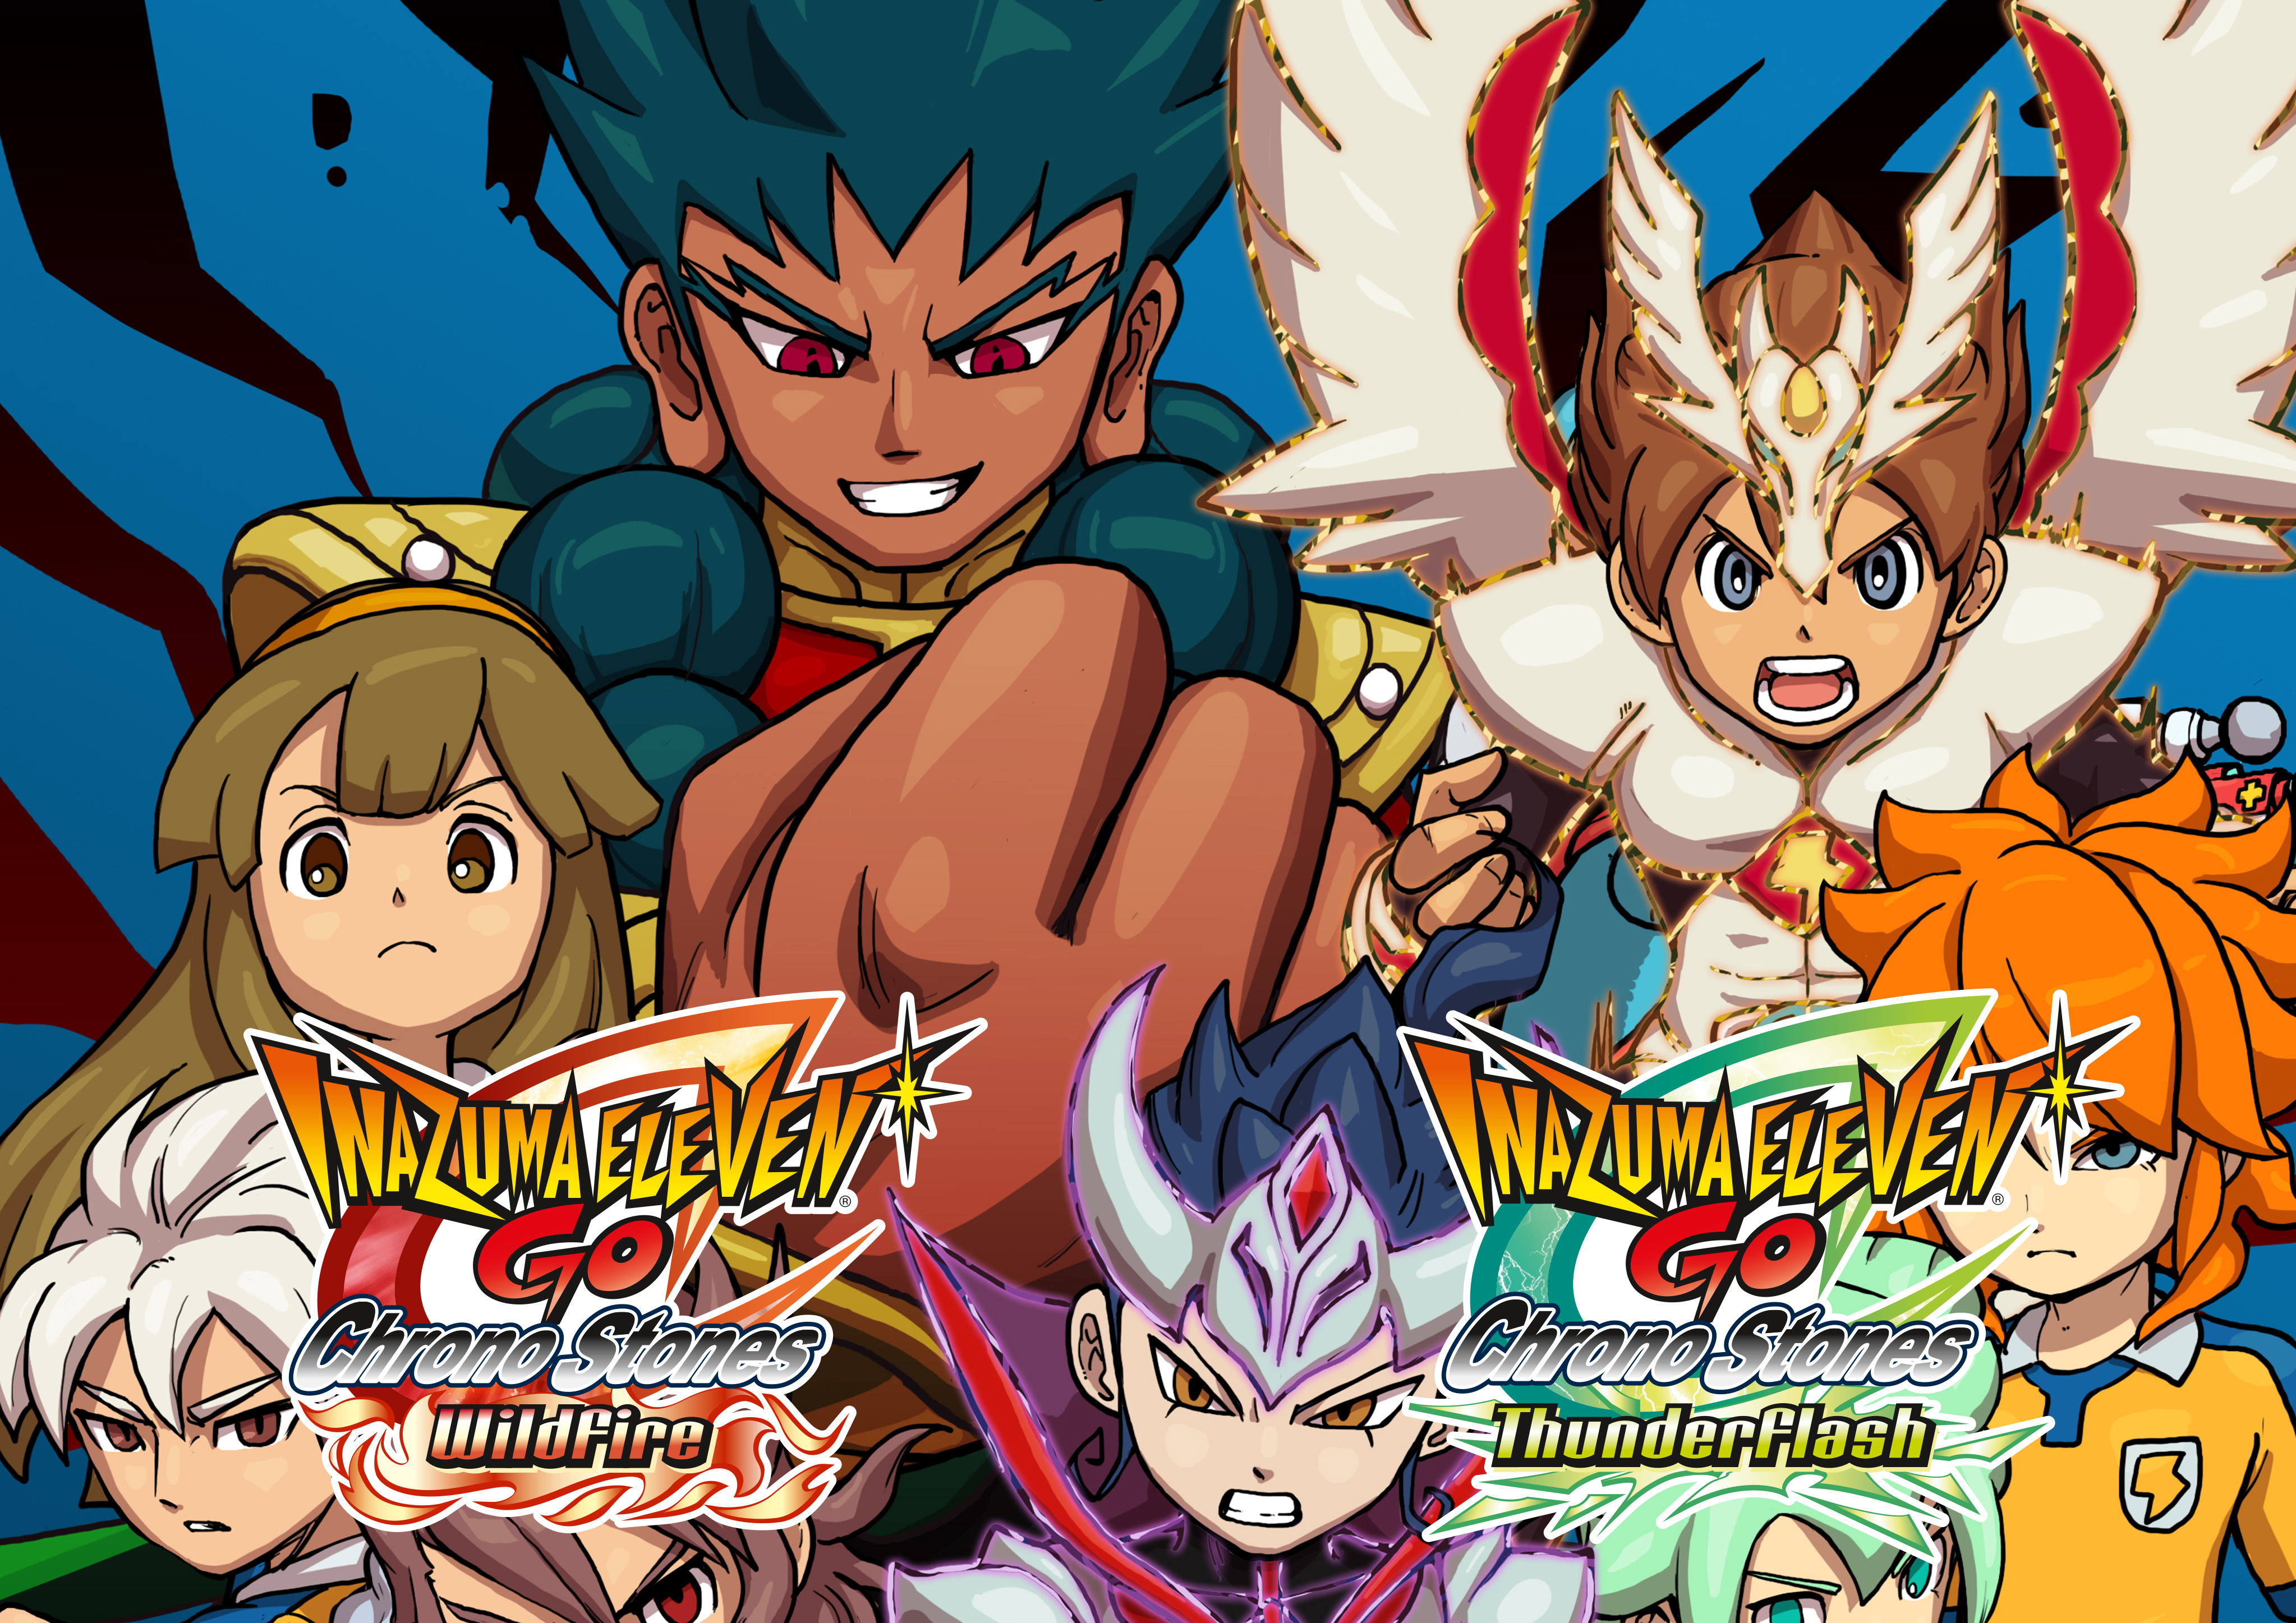 Inazuma Eleven GO Chrono Stones: Thunderflash / Wildfire - Meus Jogos